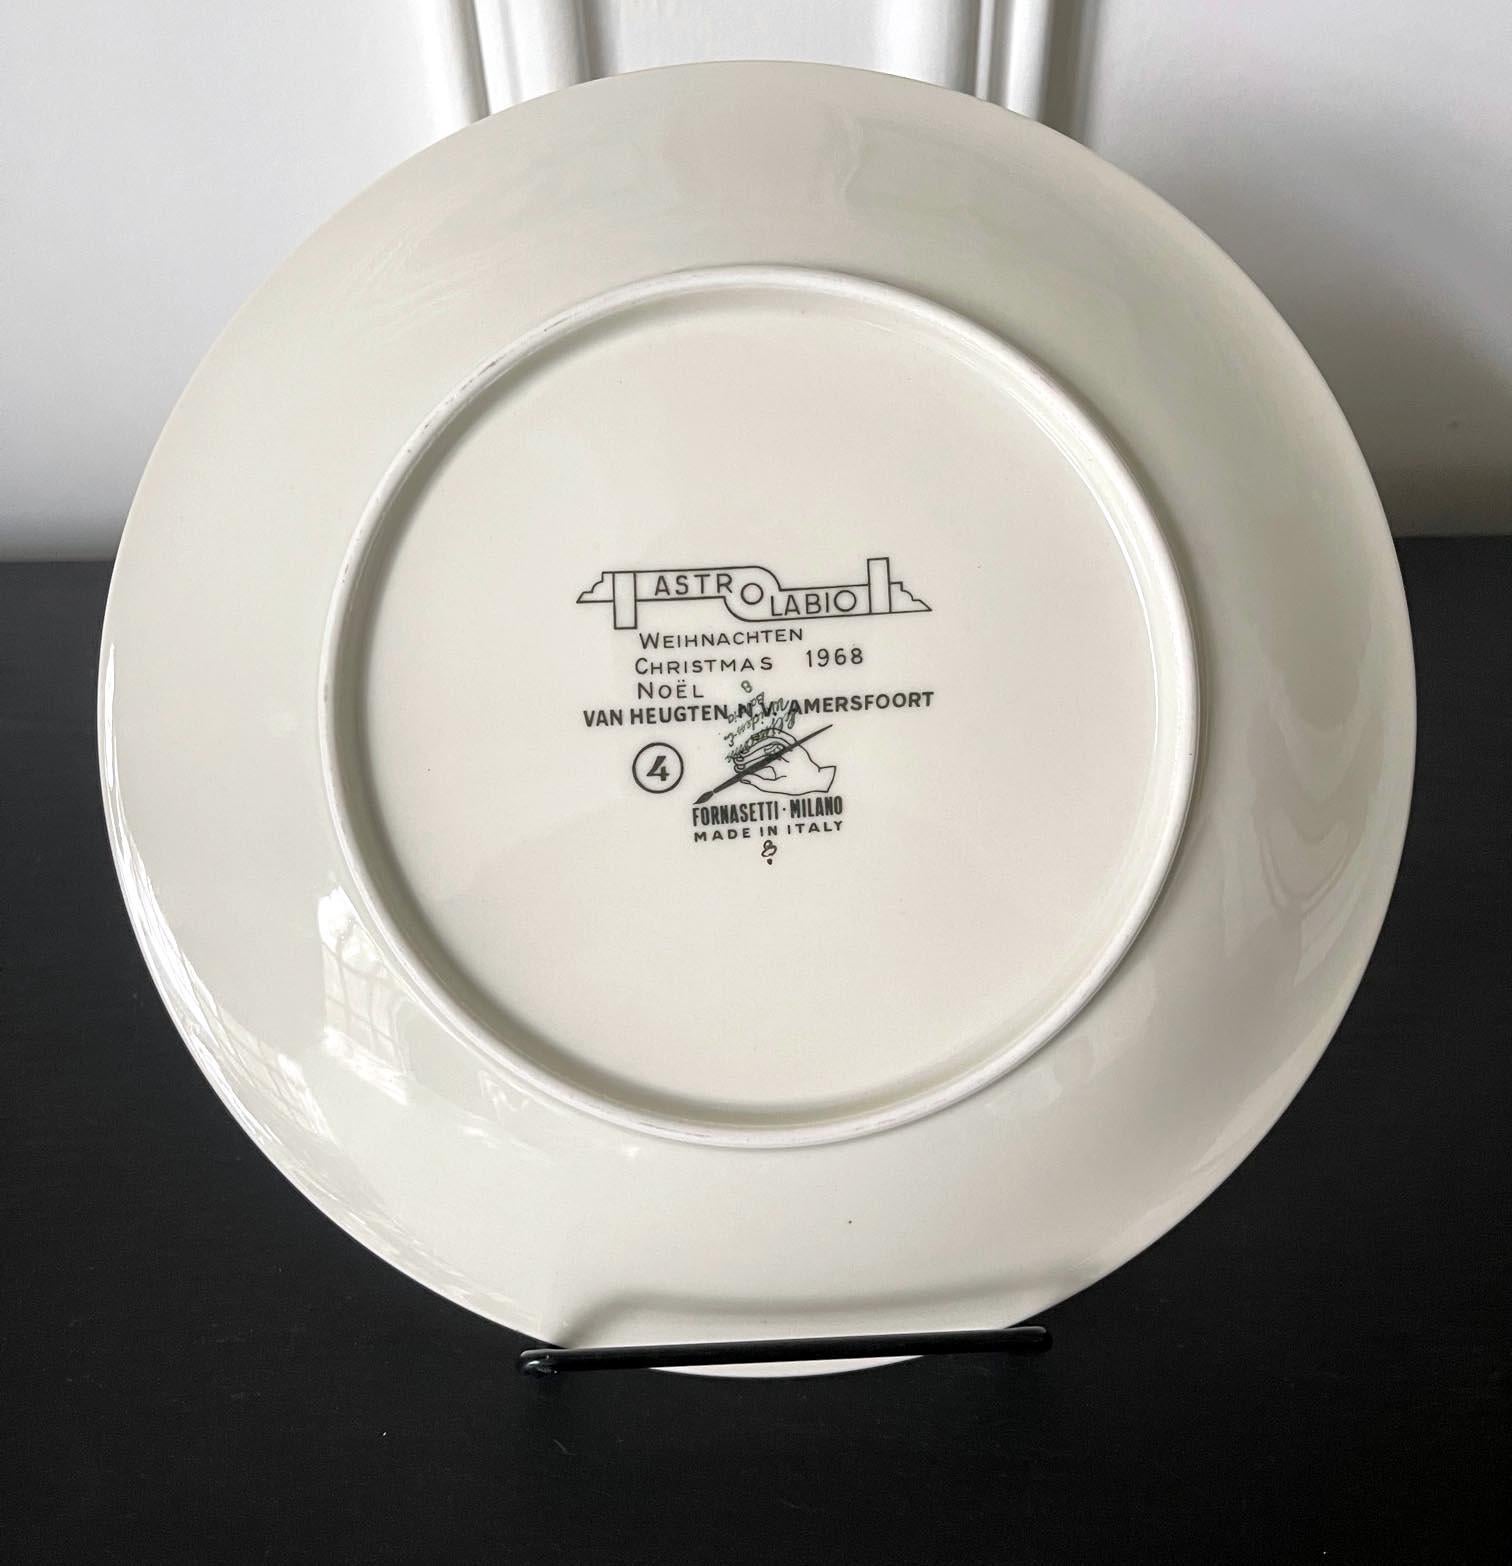 Piero Fornasetti Astrolabe Porcelain Plate 1968 For Sale 1